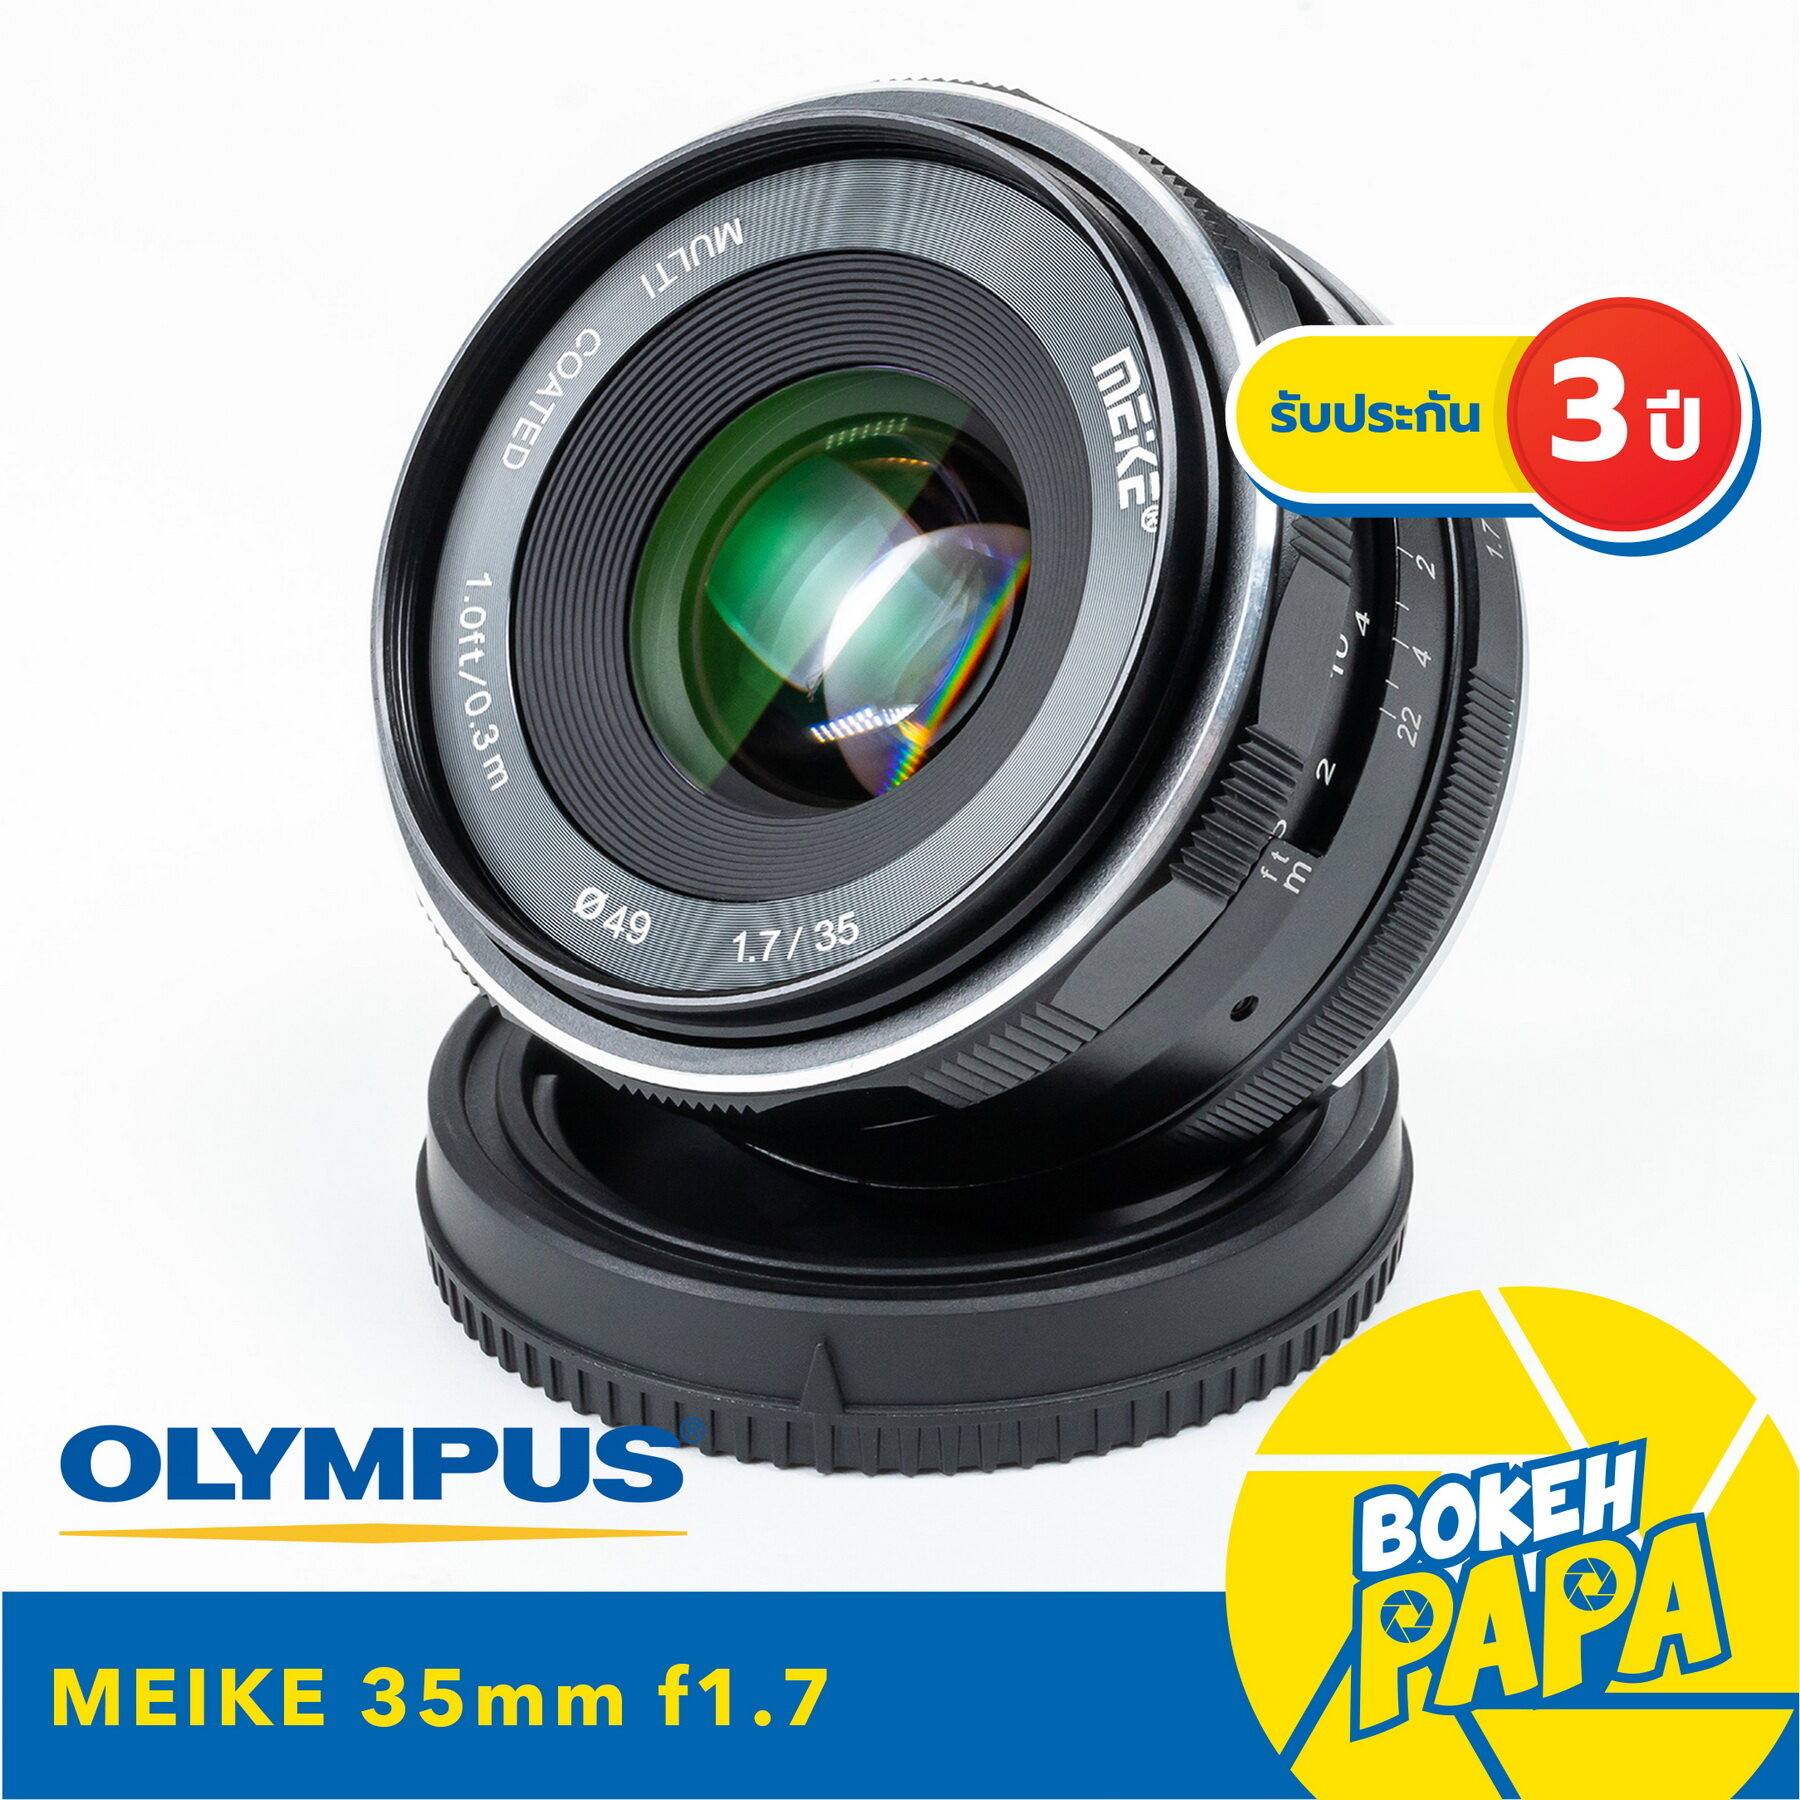 MEIKE 35mm F1.7 สำหรับใส่กล้อง OLYMPUS AND PANASONIC LUMIX Mirrorless ได้ทุกรุ่น เลนส์หน้าชัดหลังเบลอ ( เลนส์มือหมุน ) ( เลนส์ละลายหลัง ) ( Manual Focus ) ( สำหรับ กล้อง โอลิมปัส ) ( สำหรับ กล้อง พานาโซนิค ลูมิค ) ( 35 mm )